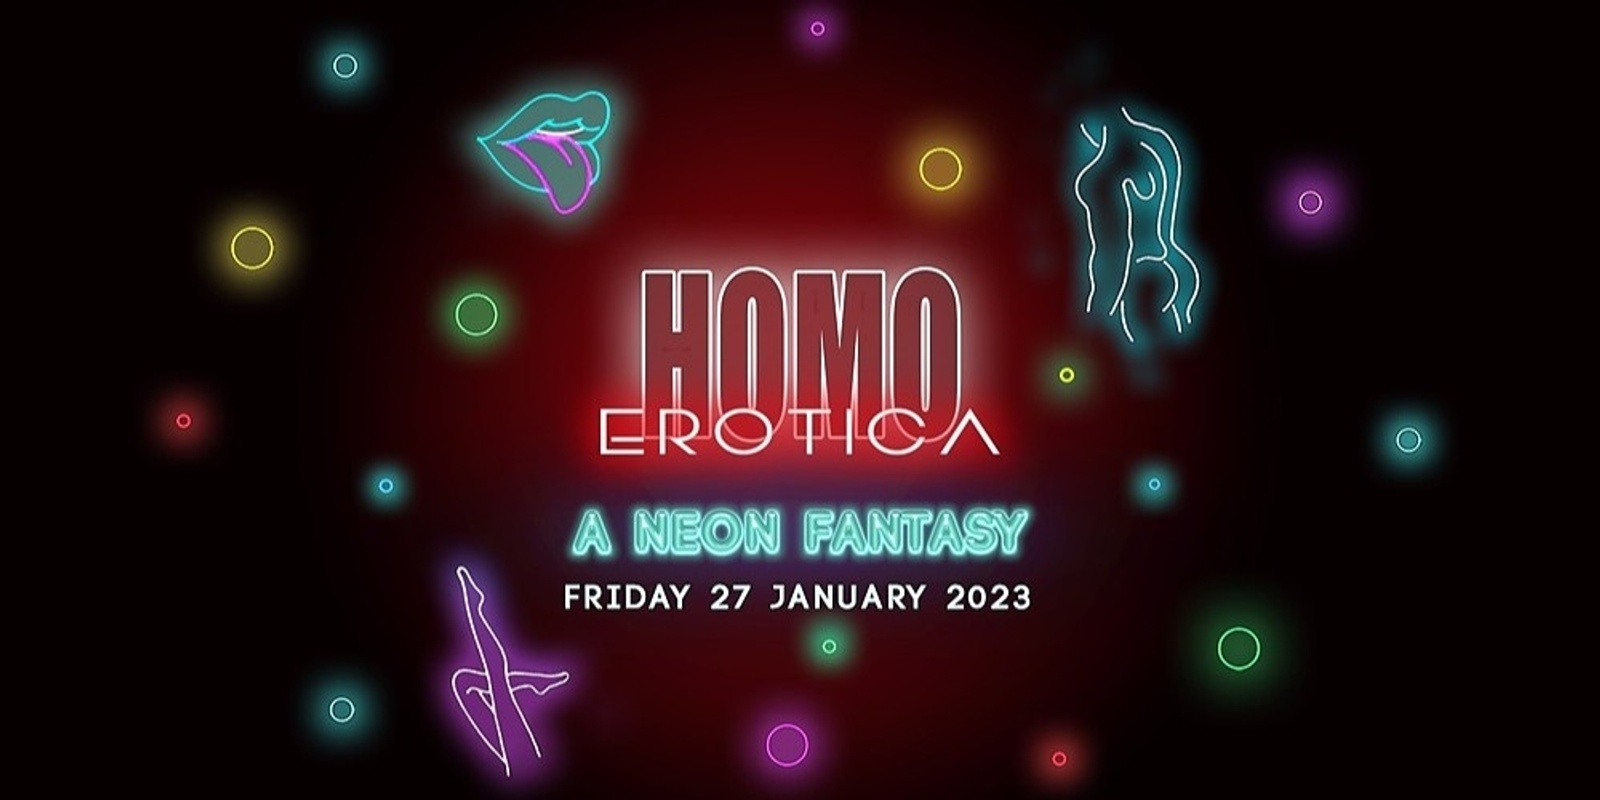 HOMO EROTICA - A Neon Fantasy ft. House Mum / Xanthraxx B2B rmr / pristiq / Esmeralda / Jason Buchanan